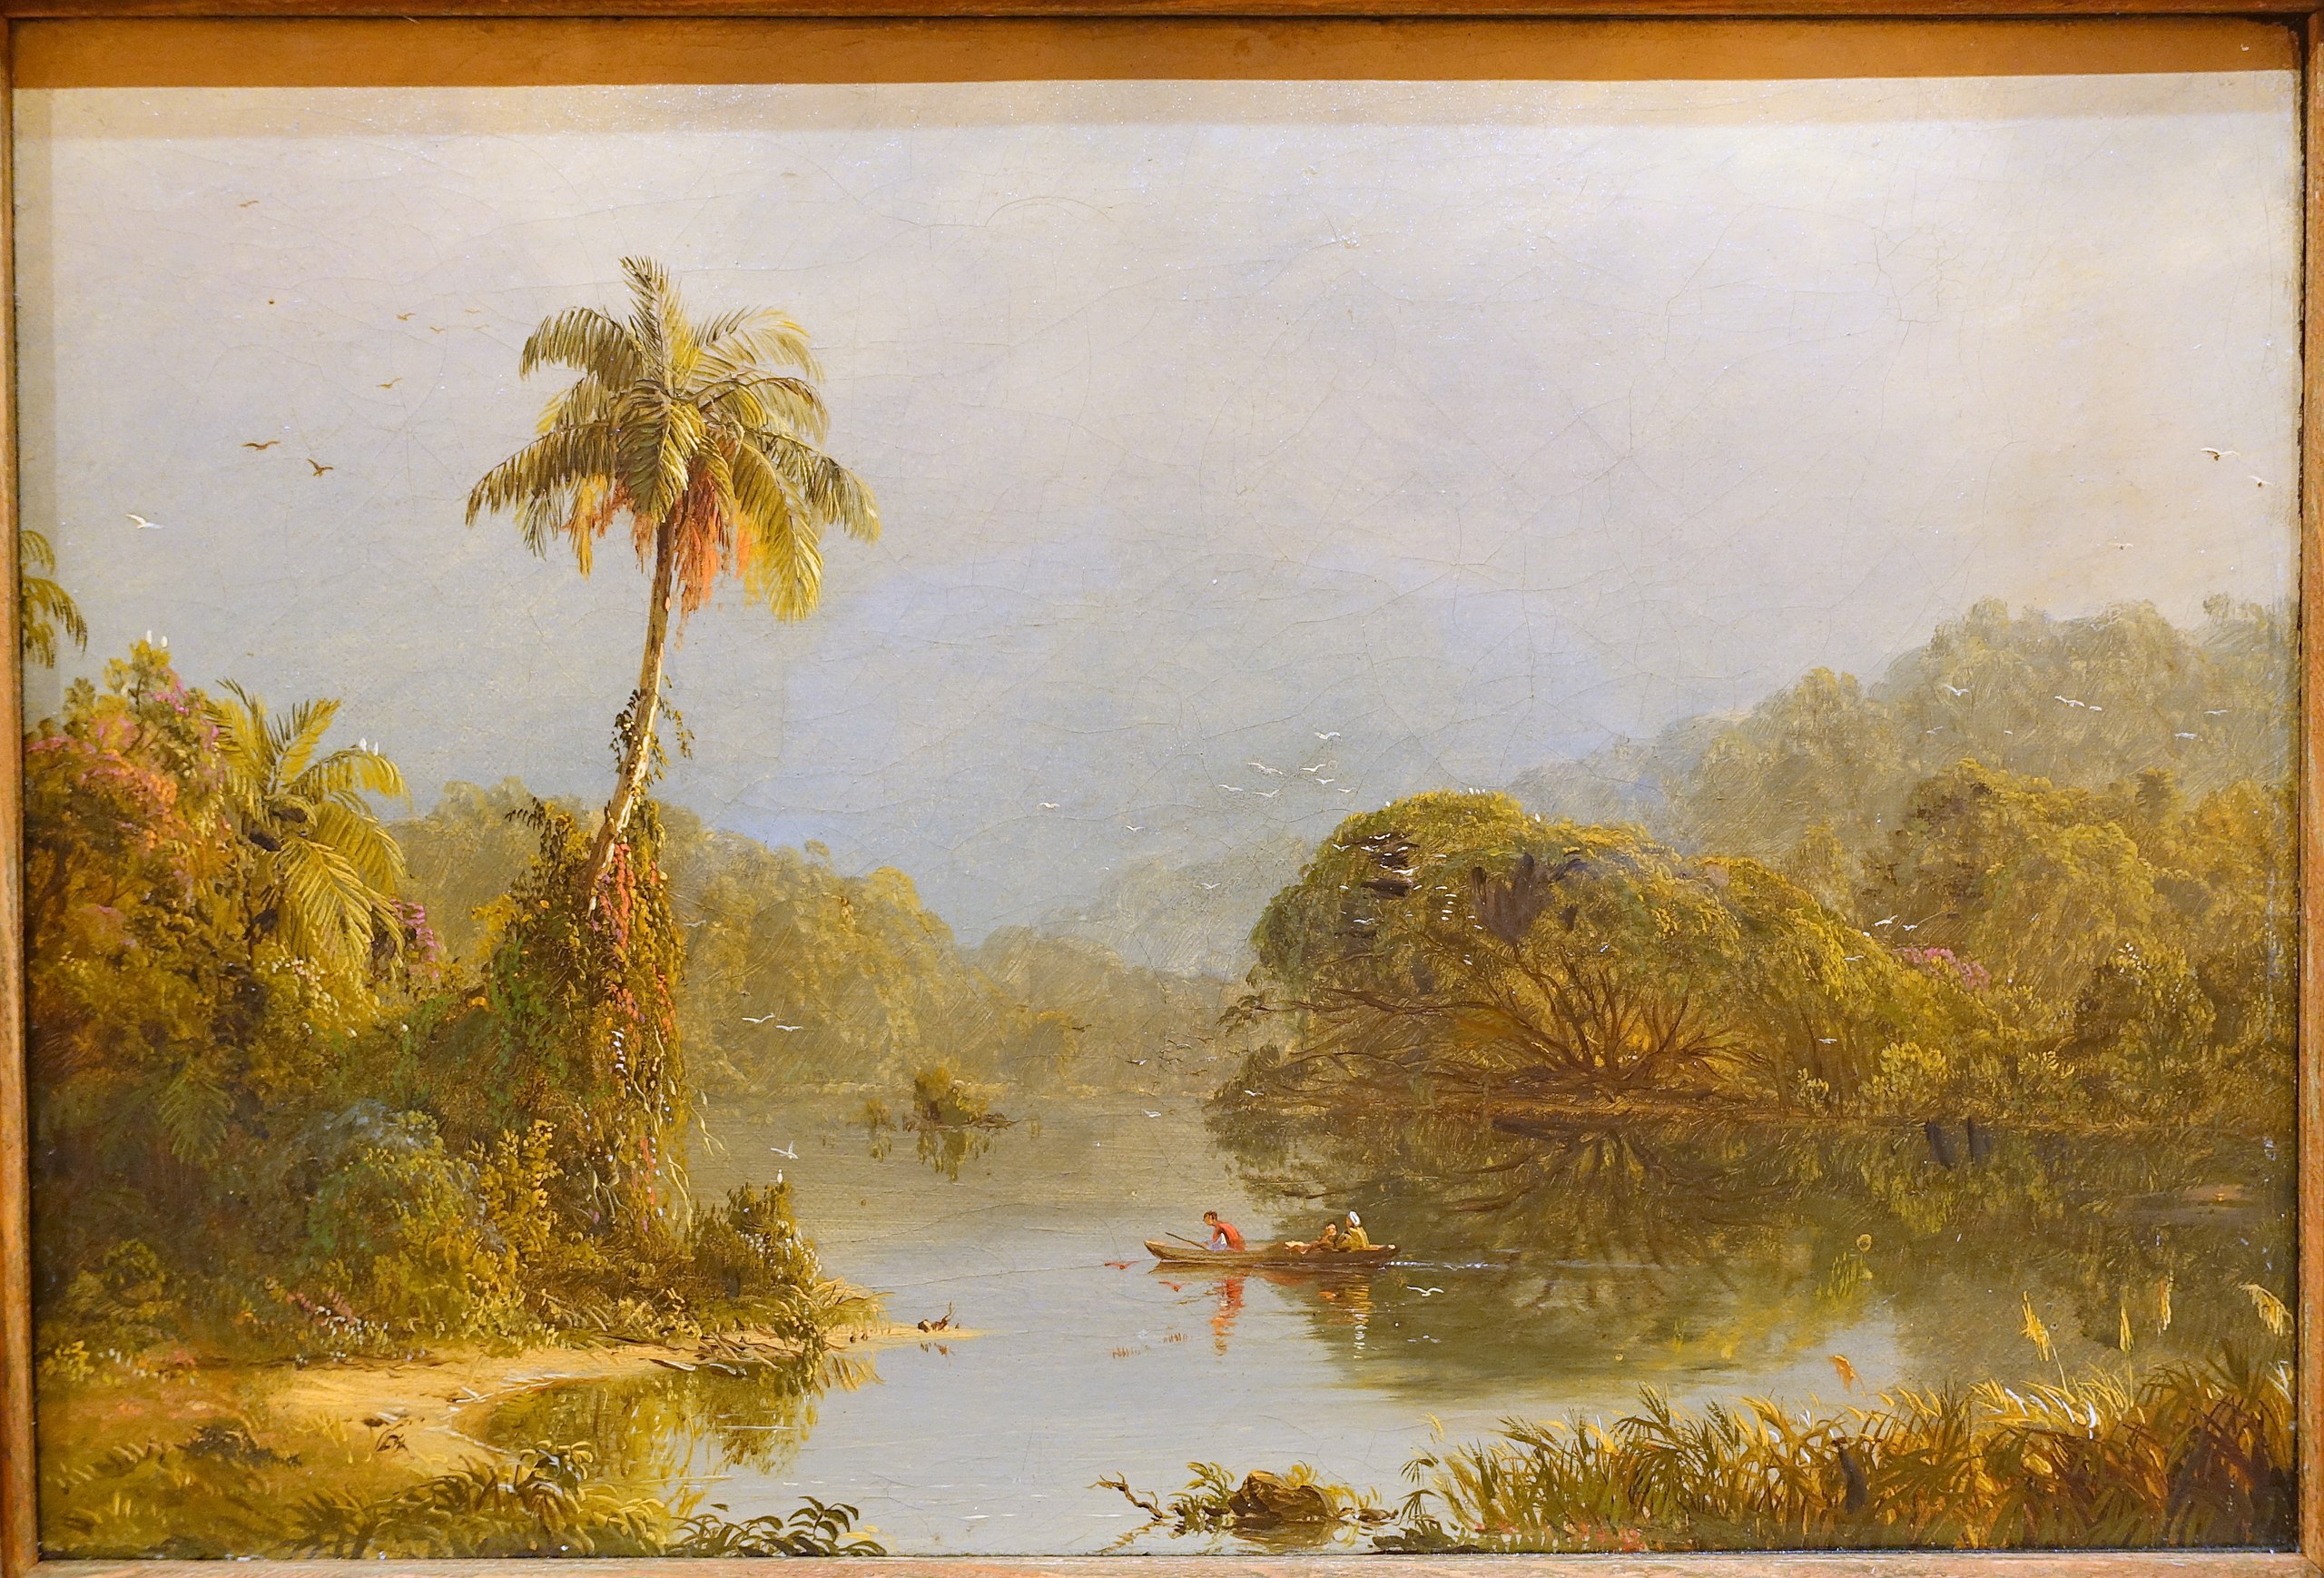 File:Tropical Landscape by Frederic Edwin Church, c. 1855 AD, oil on canvas - Museo Nacional Centro de Arte Reina Sofía - DSC08629.JPG - Wikimedia Commons